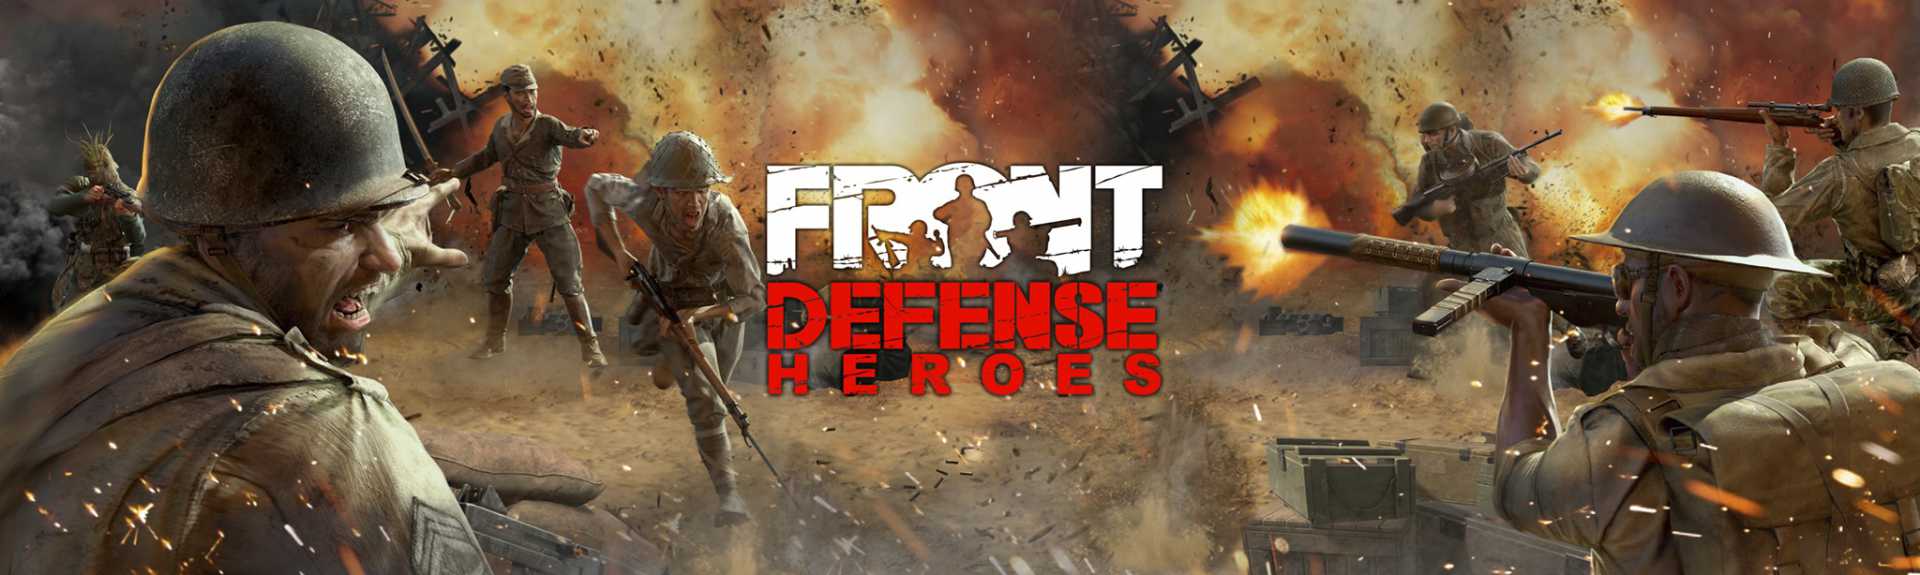 Front Defense Heroes